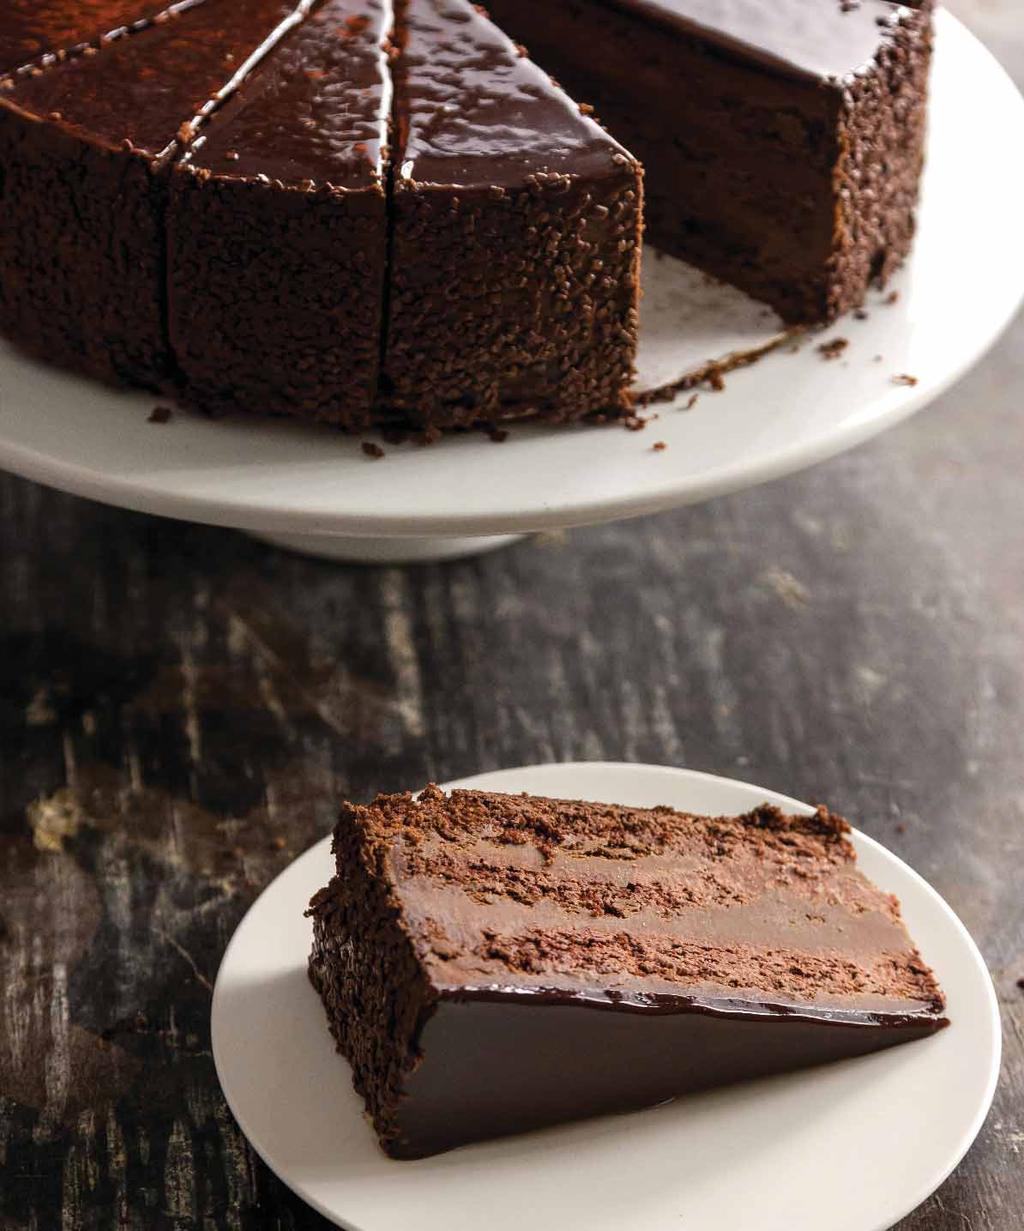 Chocolate fondant cake Κέικ σοκολατένιου παντεσπανιού με κρέμα σοκολάτας B1501 2.350 γρ.